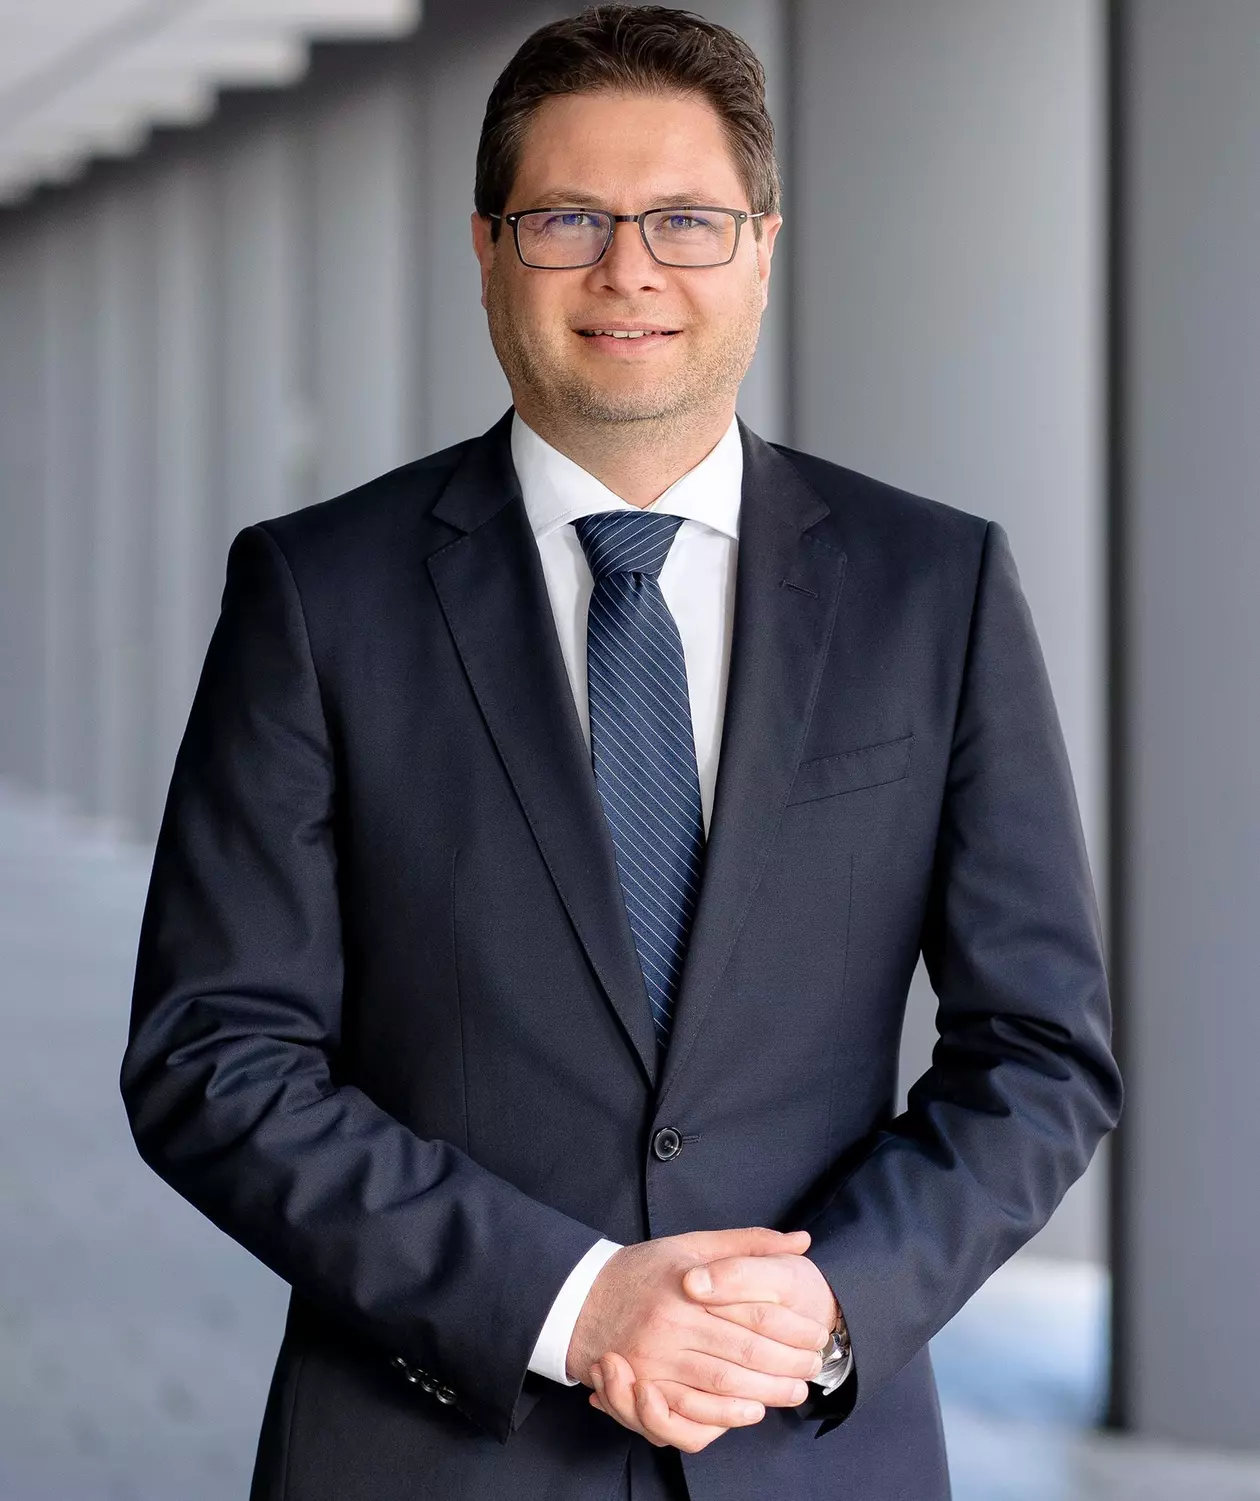 Christopher Ukatz, Managing Director of HARTING Germany